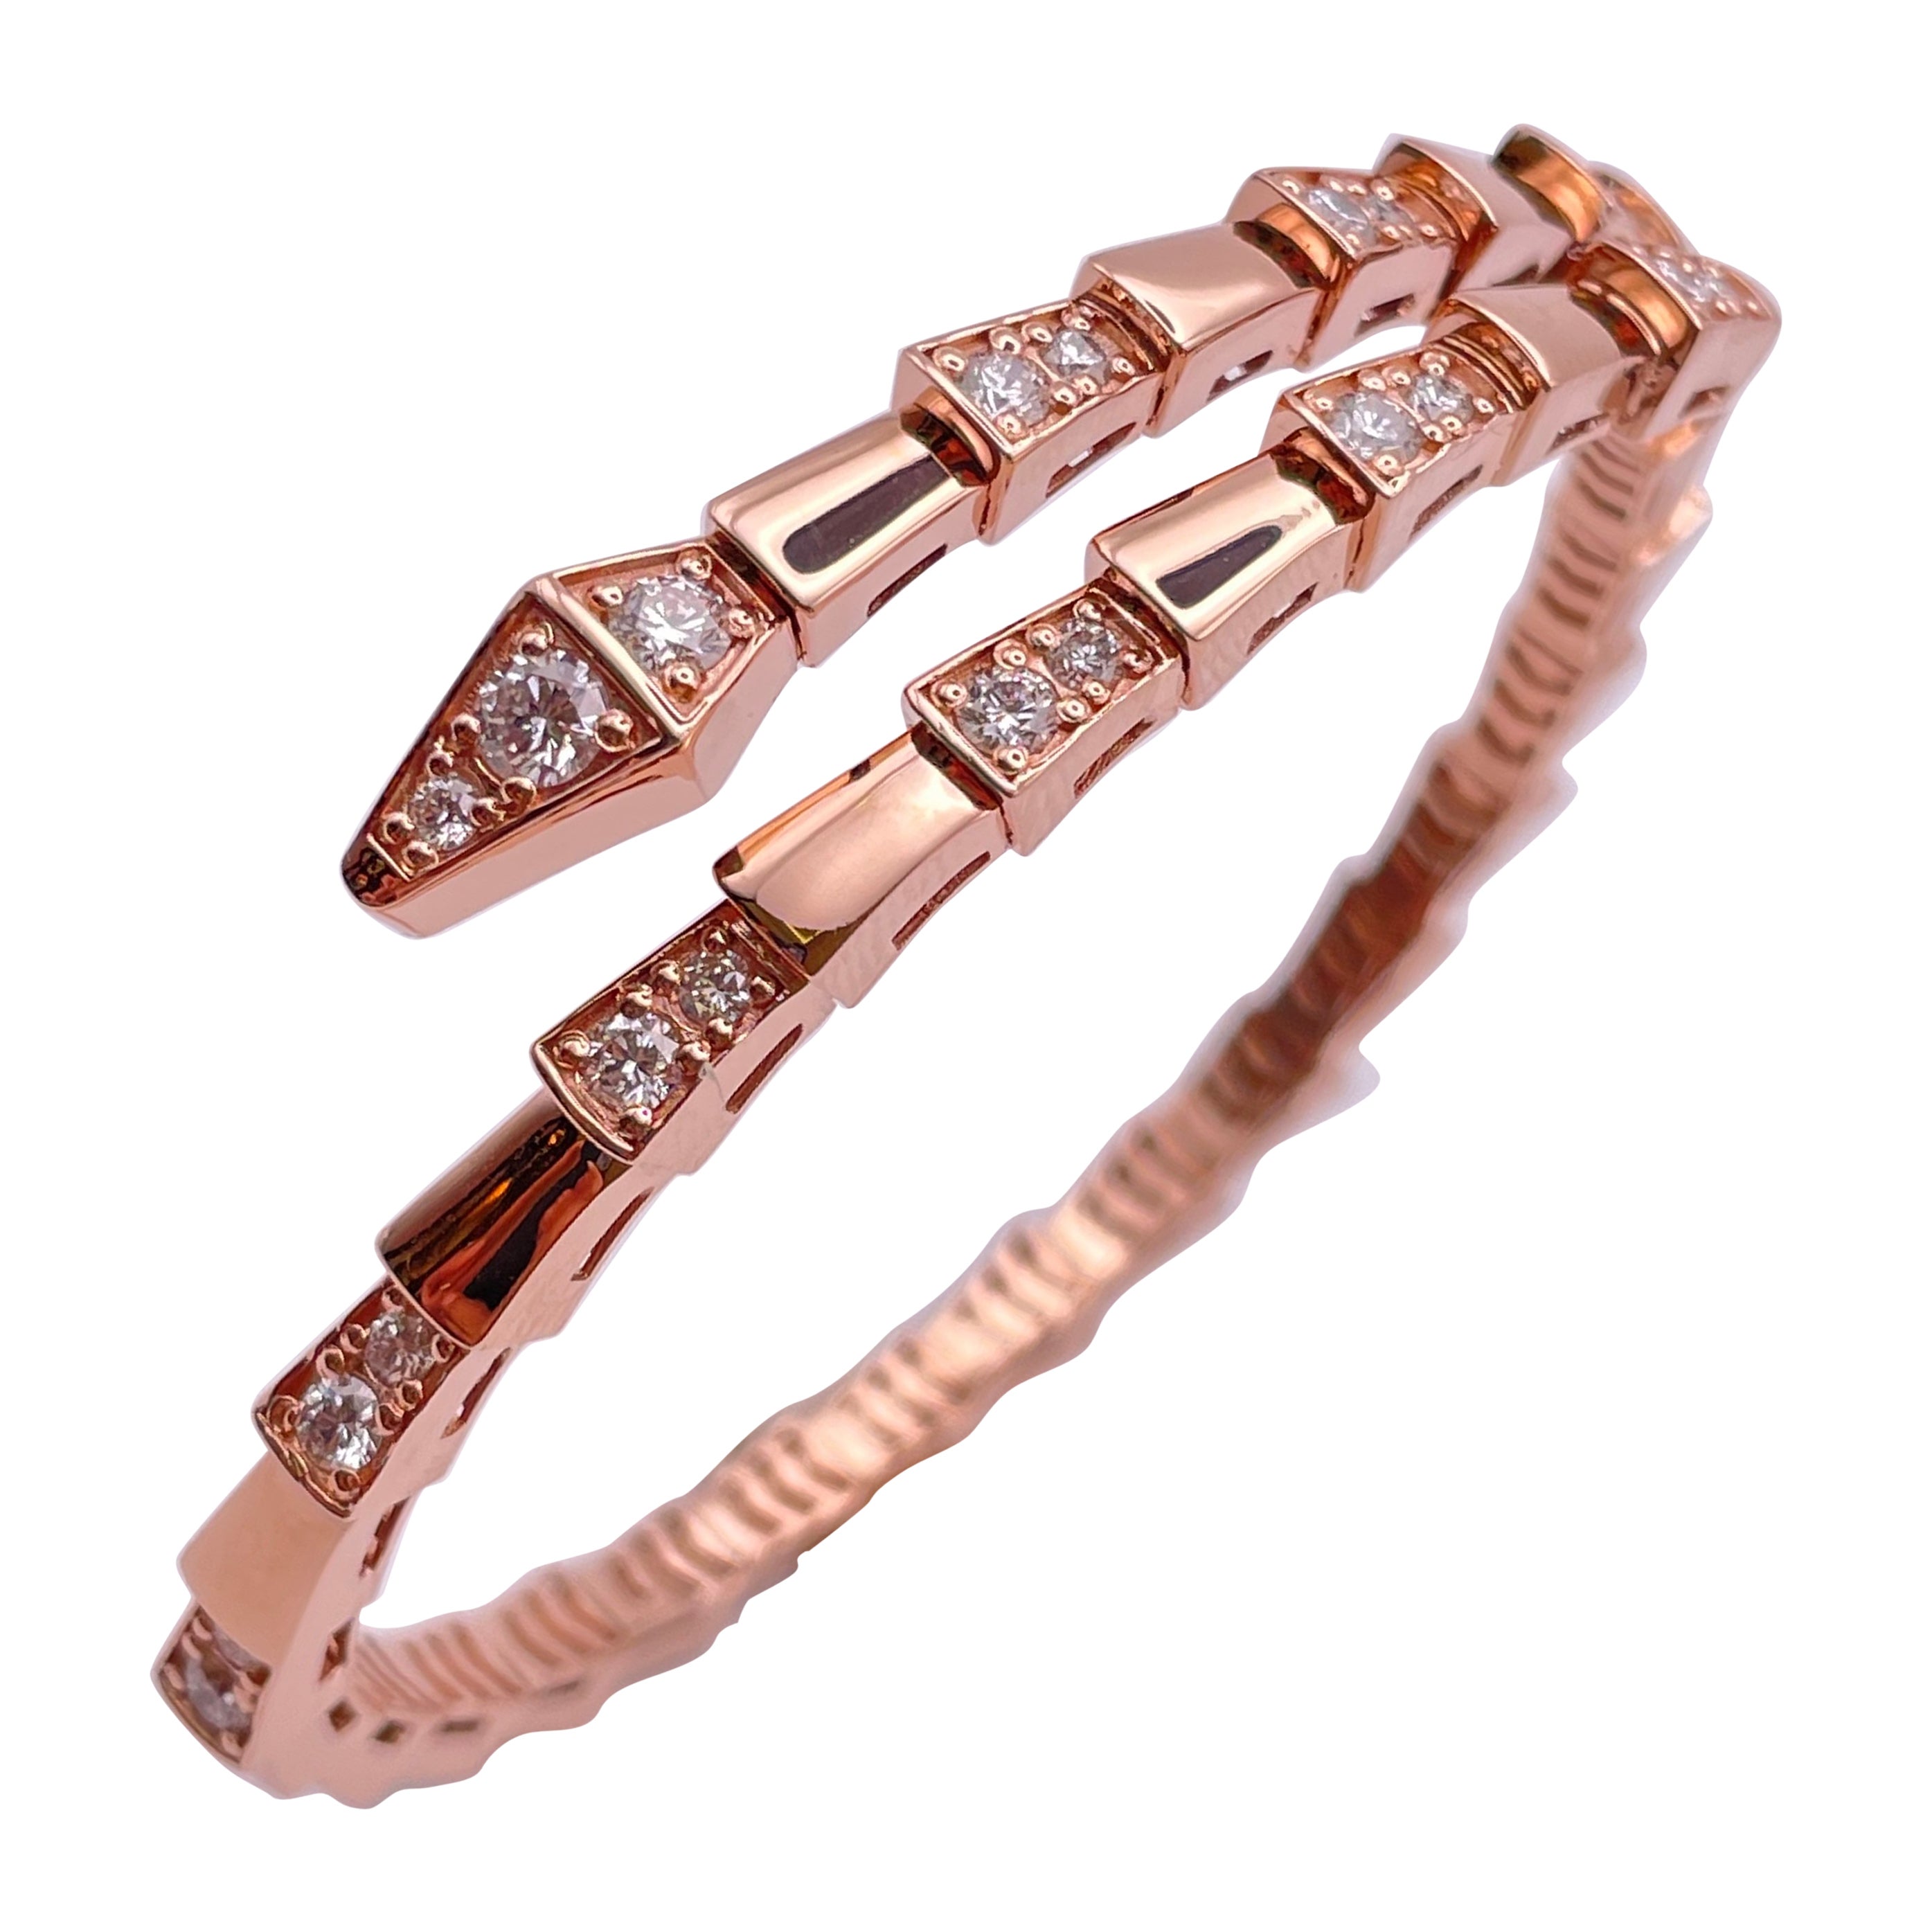 Rose Gold Snake Viper Bracelet with 1.85ct Diamonds